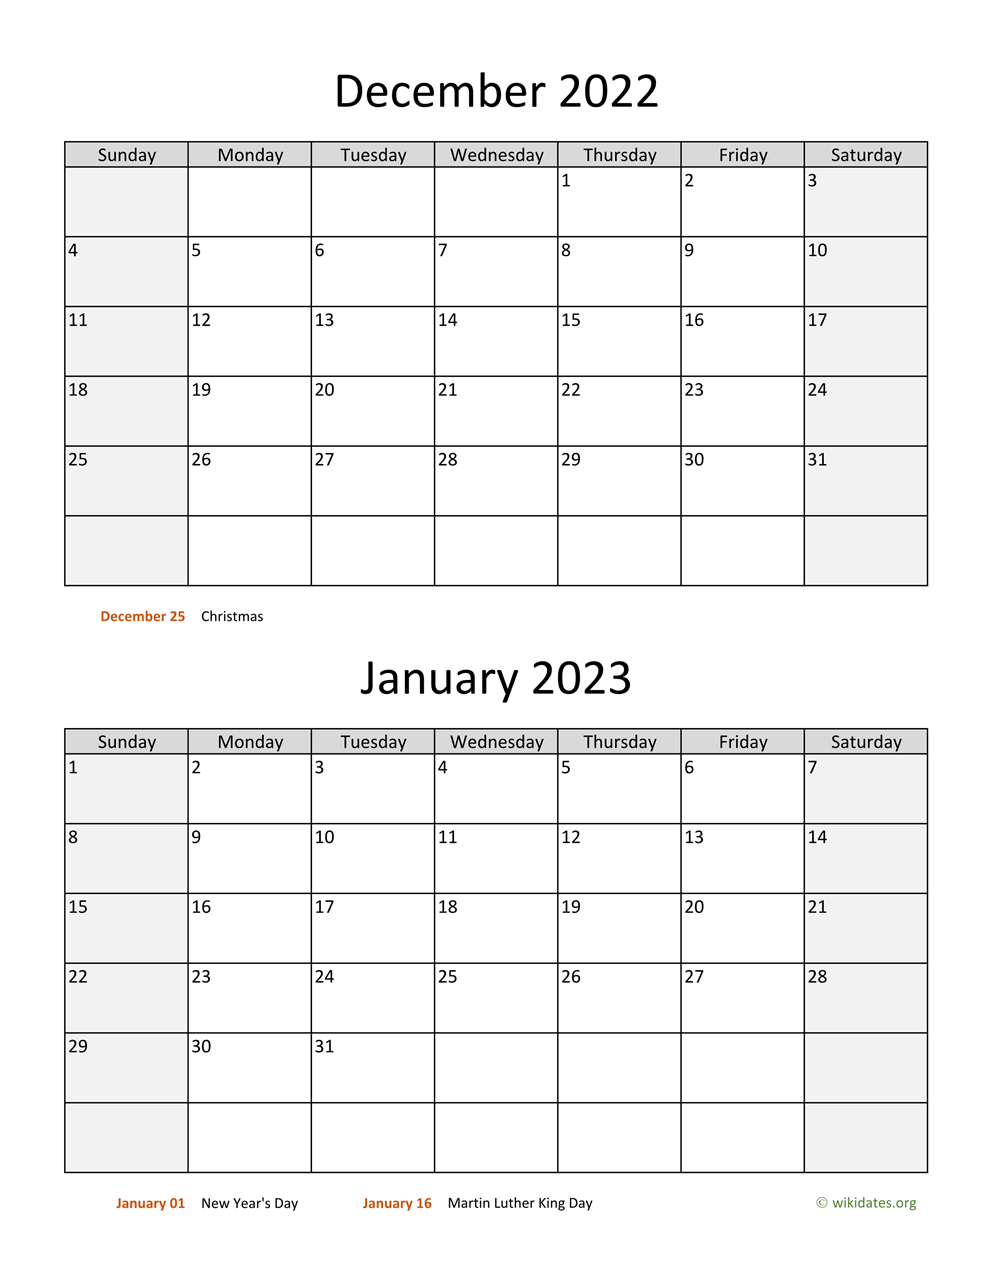 Printable Calendar December 2022 January 2023 December 2022 And January 2023 Calendar | Wikidates.org